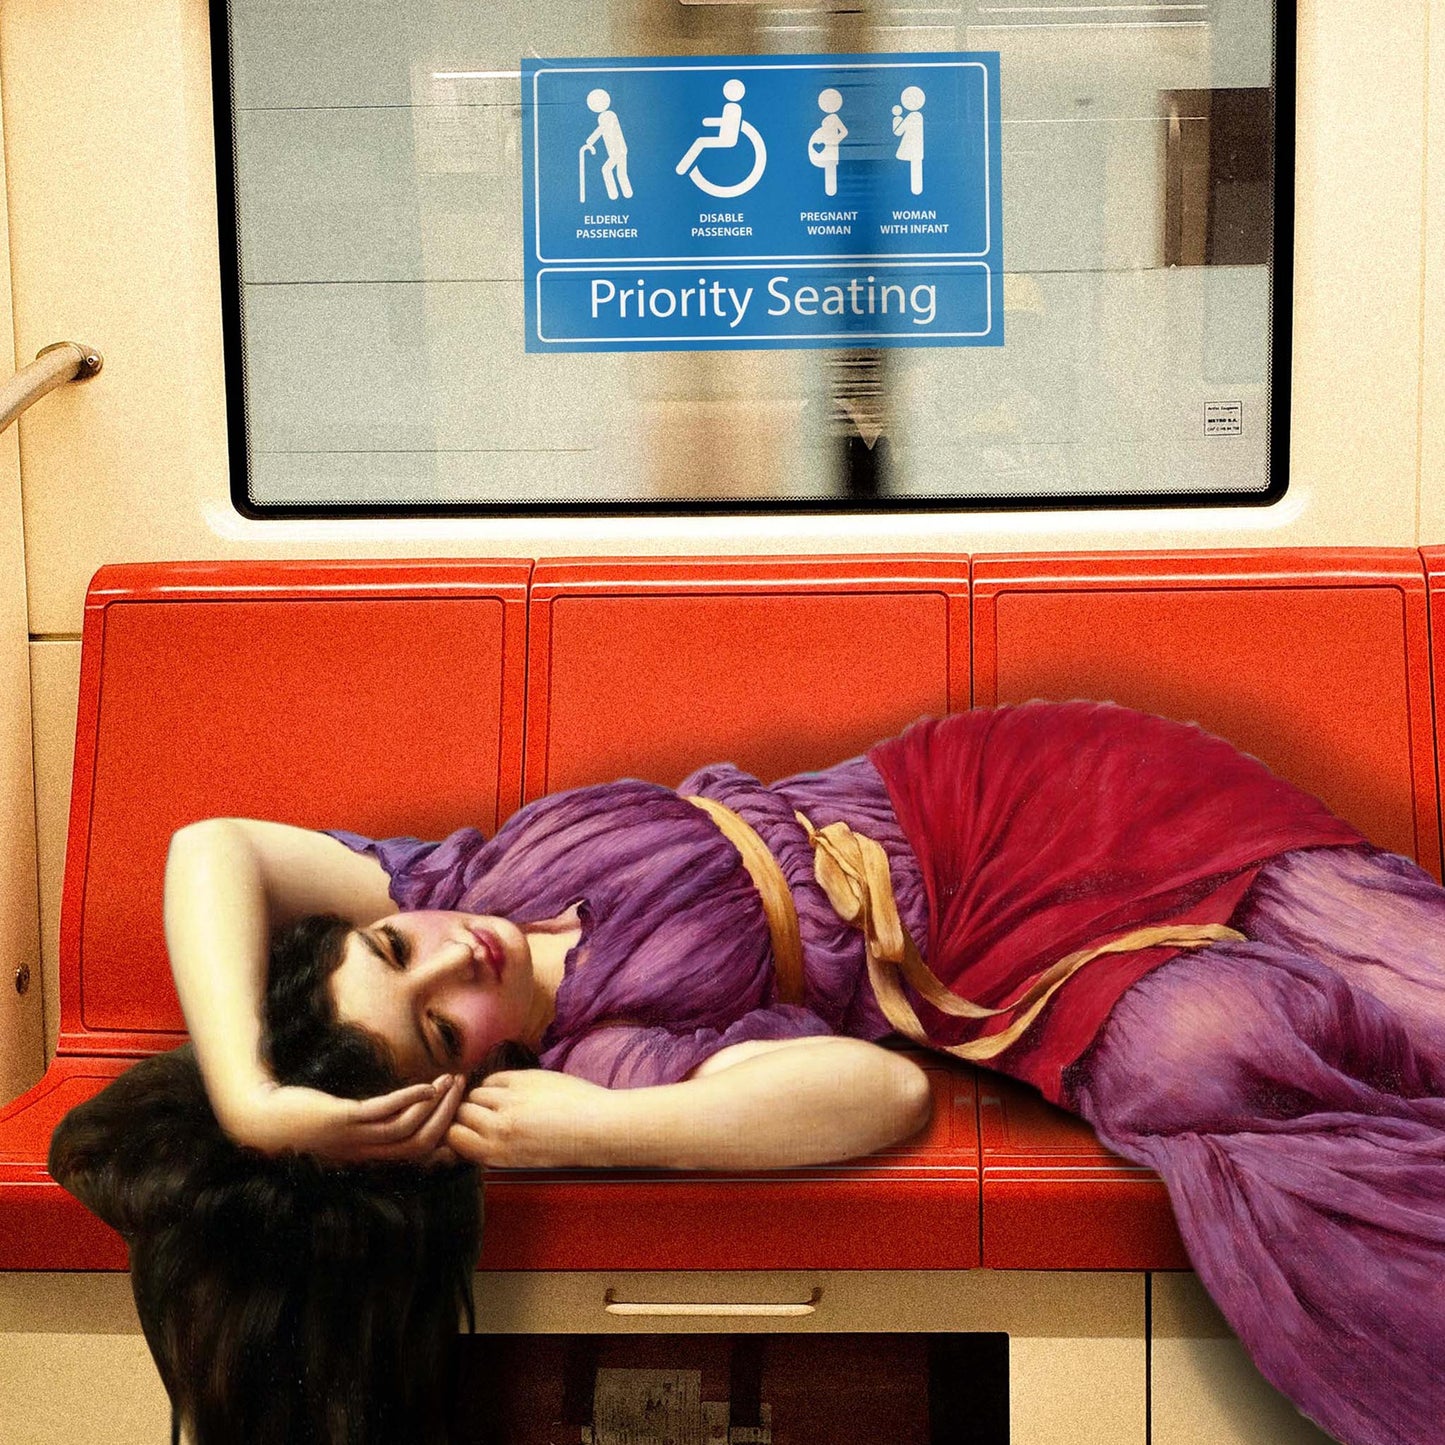 "Priority Seating" fine art print